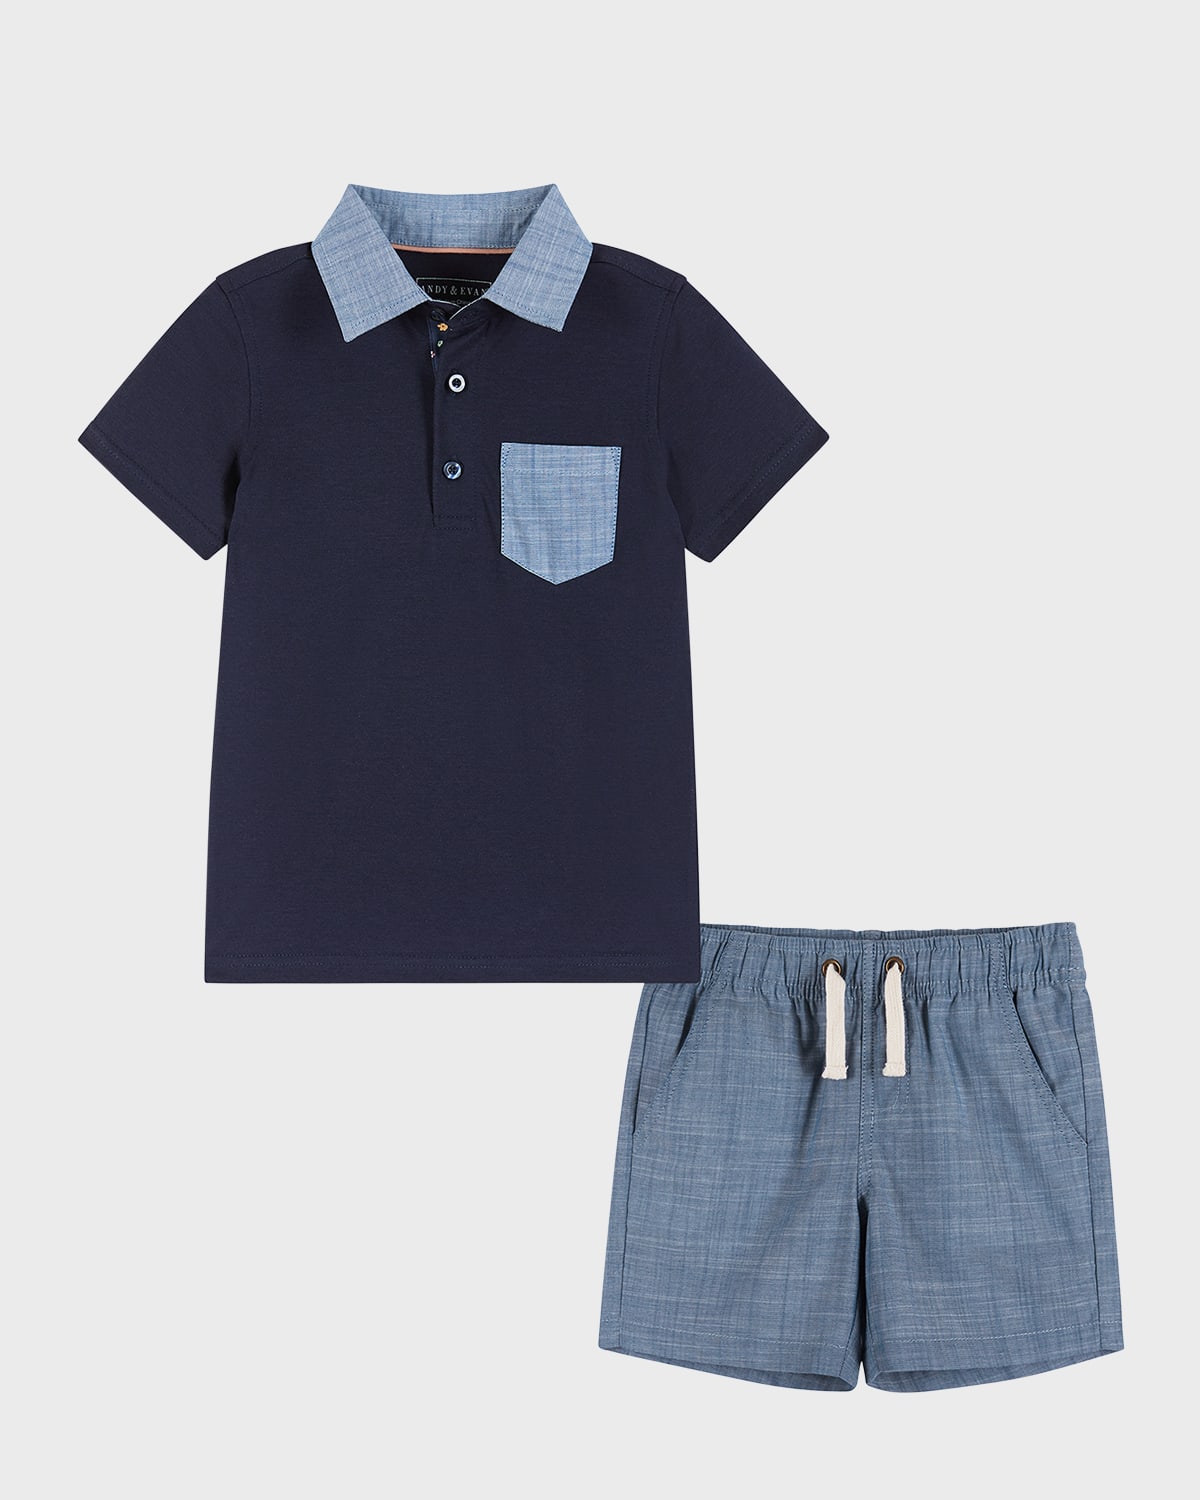 Andy & Evan Kids' Boy's Polo Shirt & Shorts Set In Navy